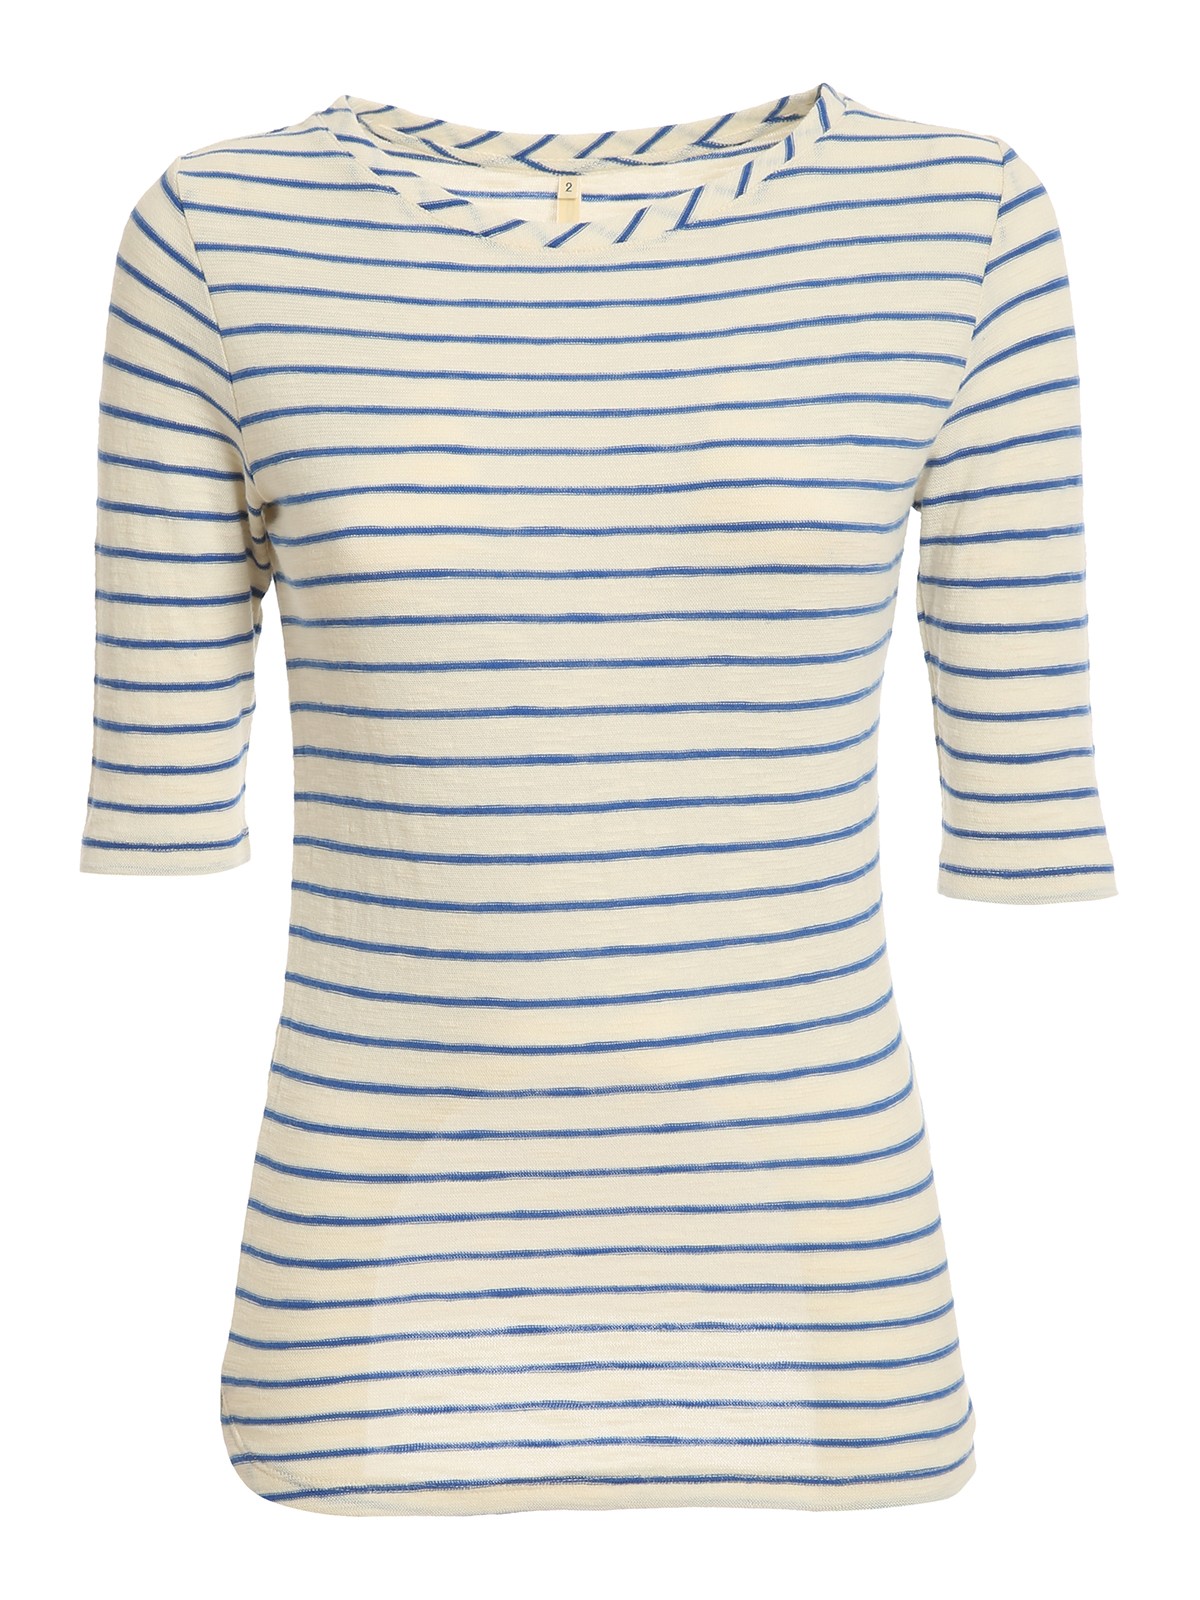 T-shirts Bellerose - Striped T-shirt - T1426SSTA | Shop online at iKRIX